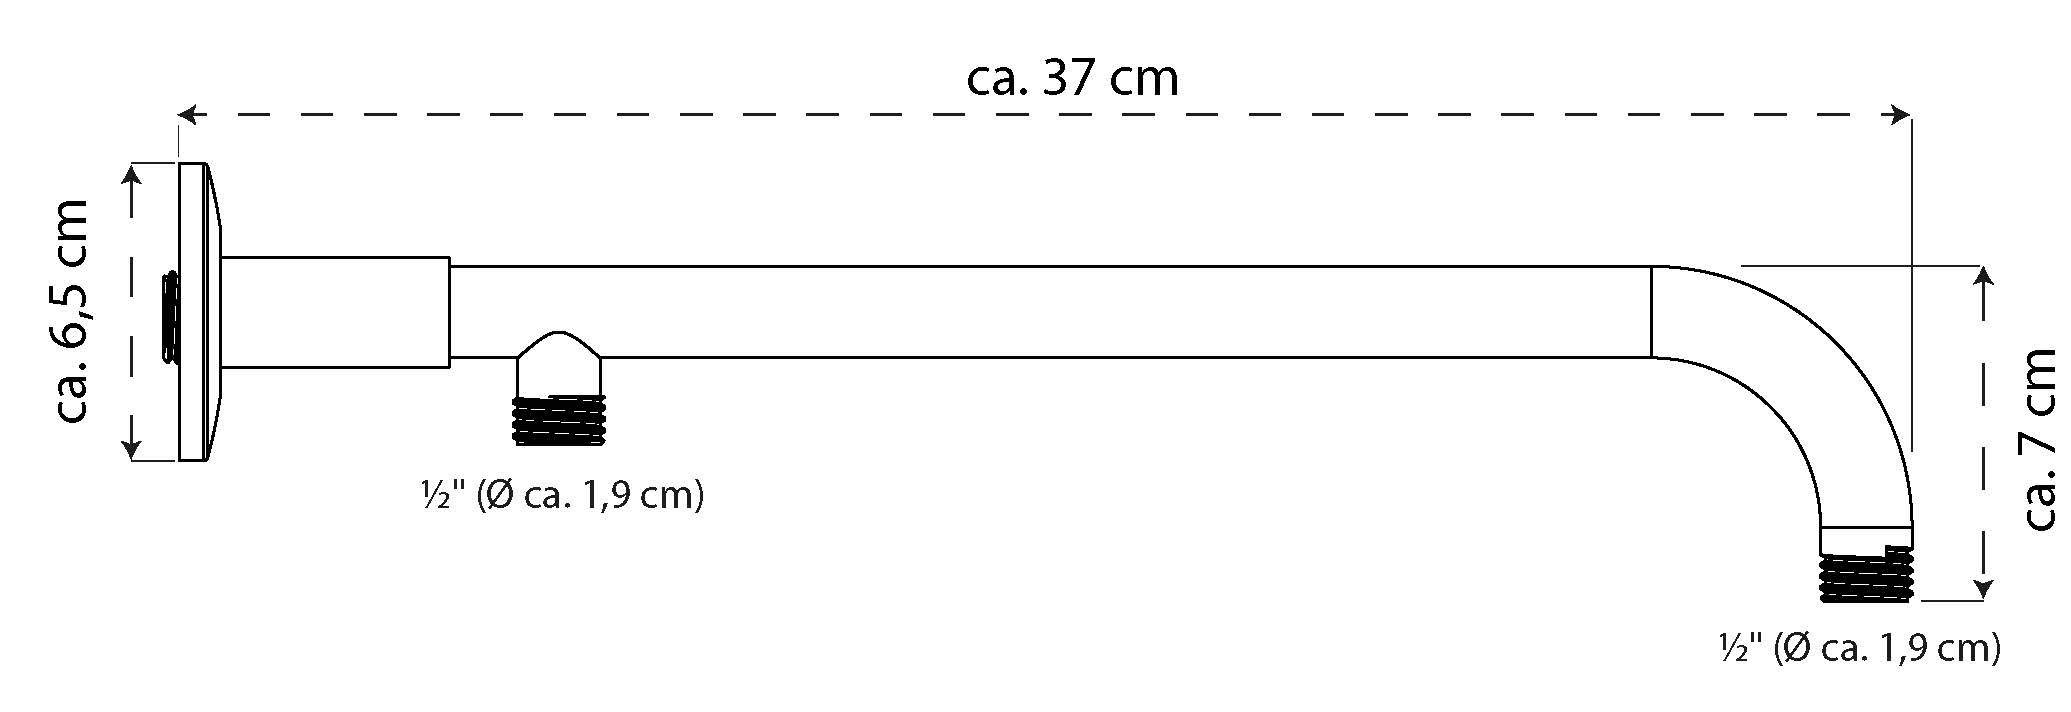 Schütte Wandanschlussbogen, 90 °, LYON, Anschlussbogen Unterputz Chrom für 37cm, Duschbrause